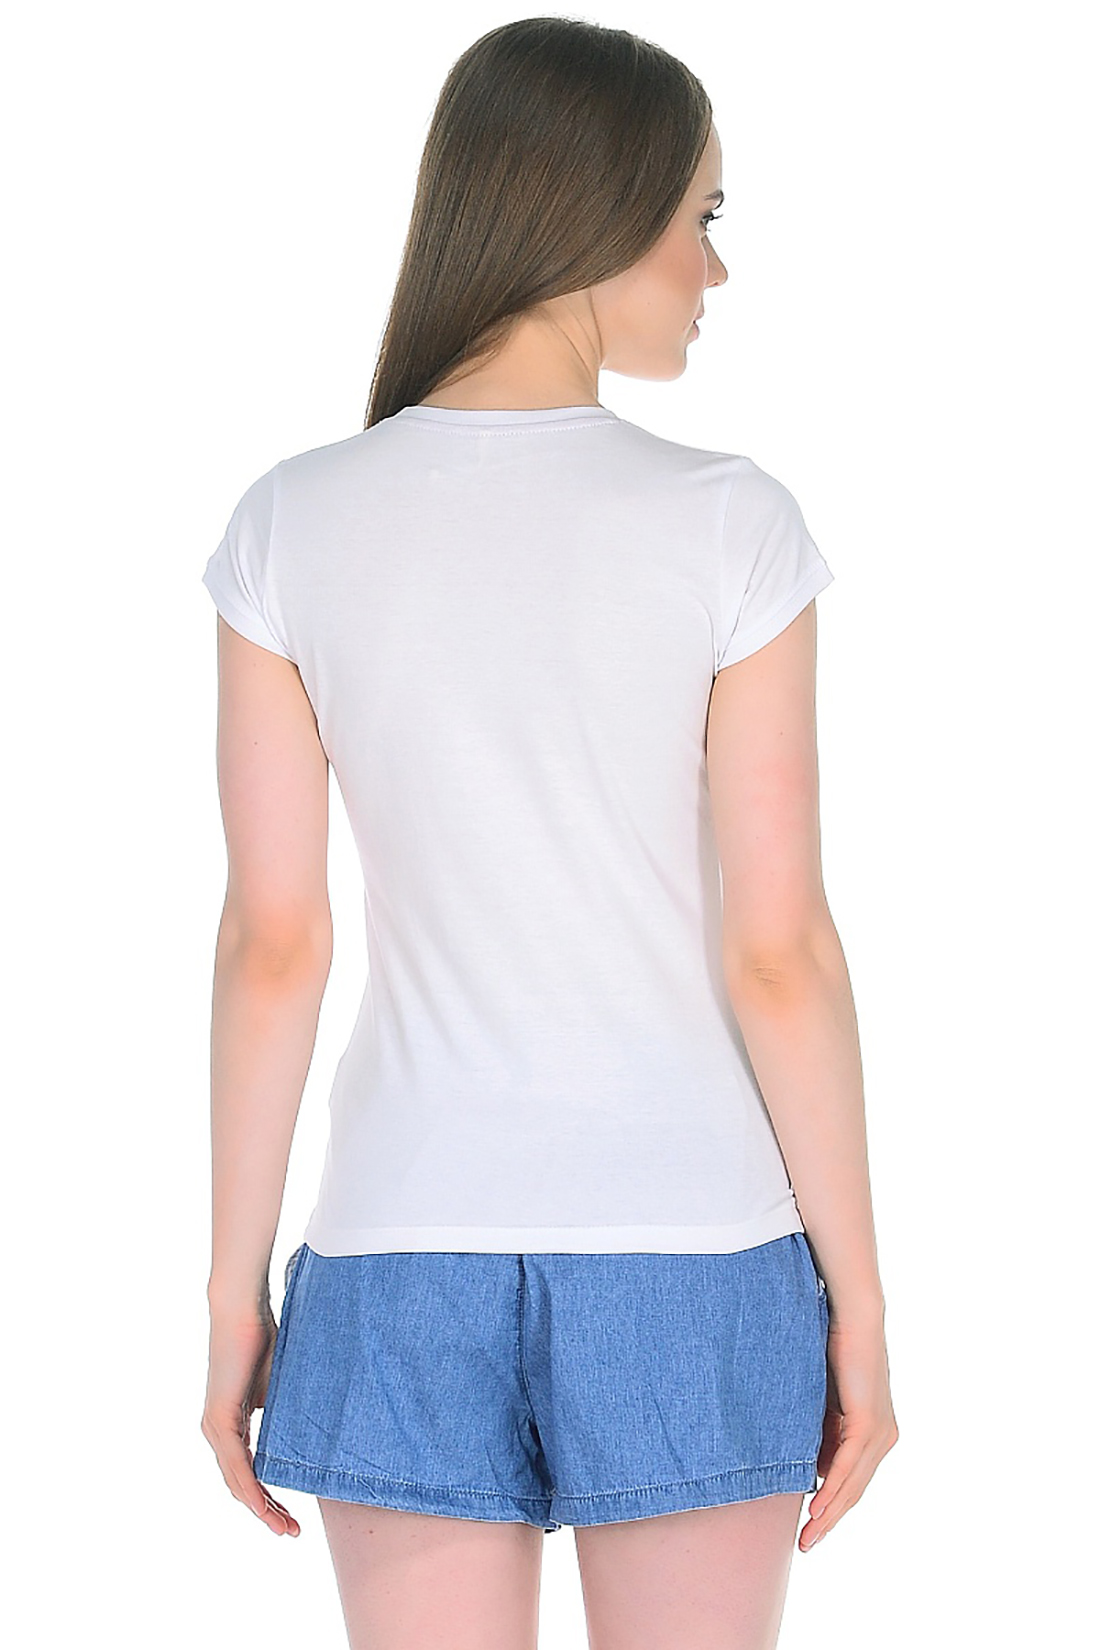 Белая футболка с морским принтом (арт. baon B238112), размер XXL, цвет белый Белая футболка с морским принтом (арт. baon B238112) - фото 2